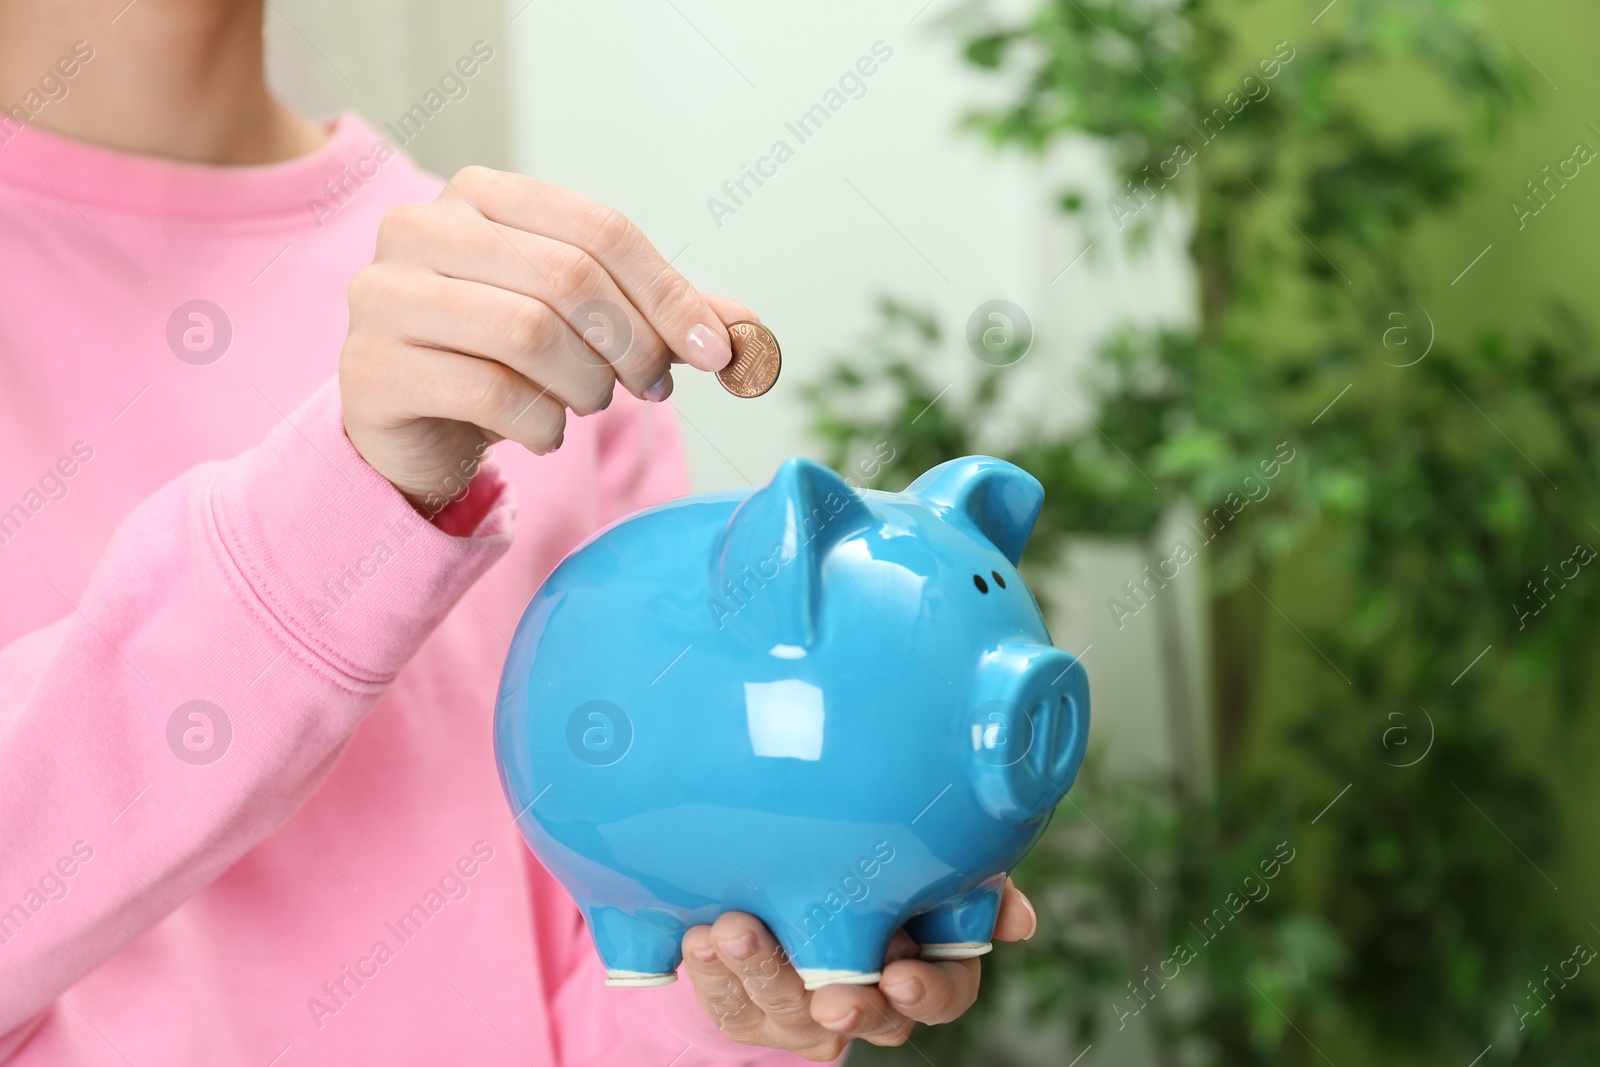 Photo of Woman putting coin into piggy bank indoors, closeup